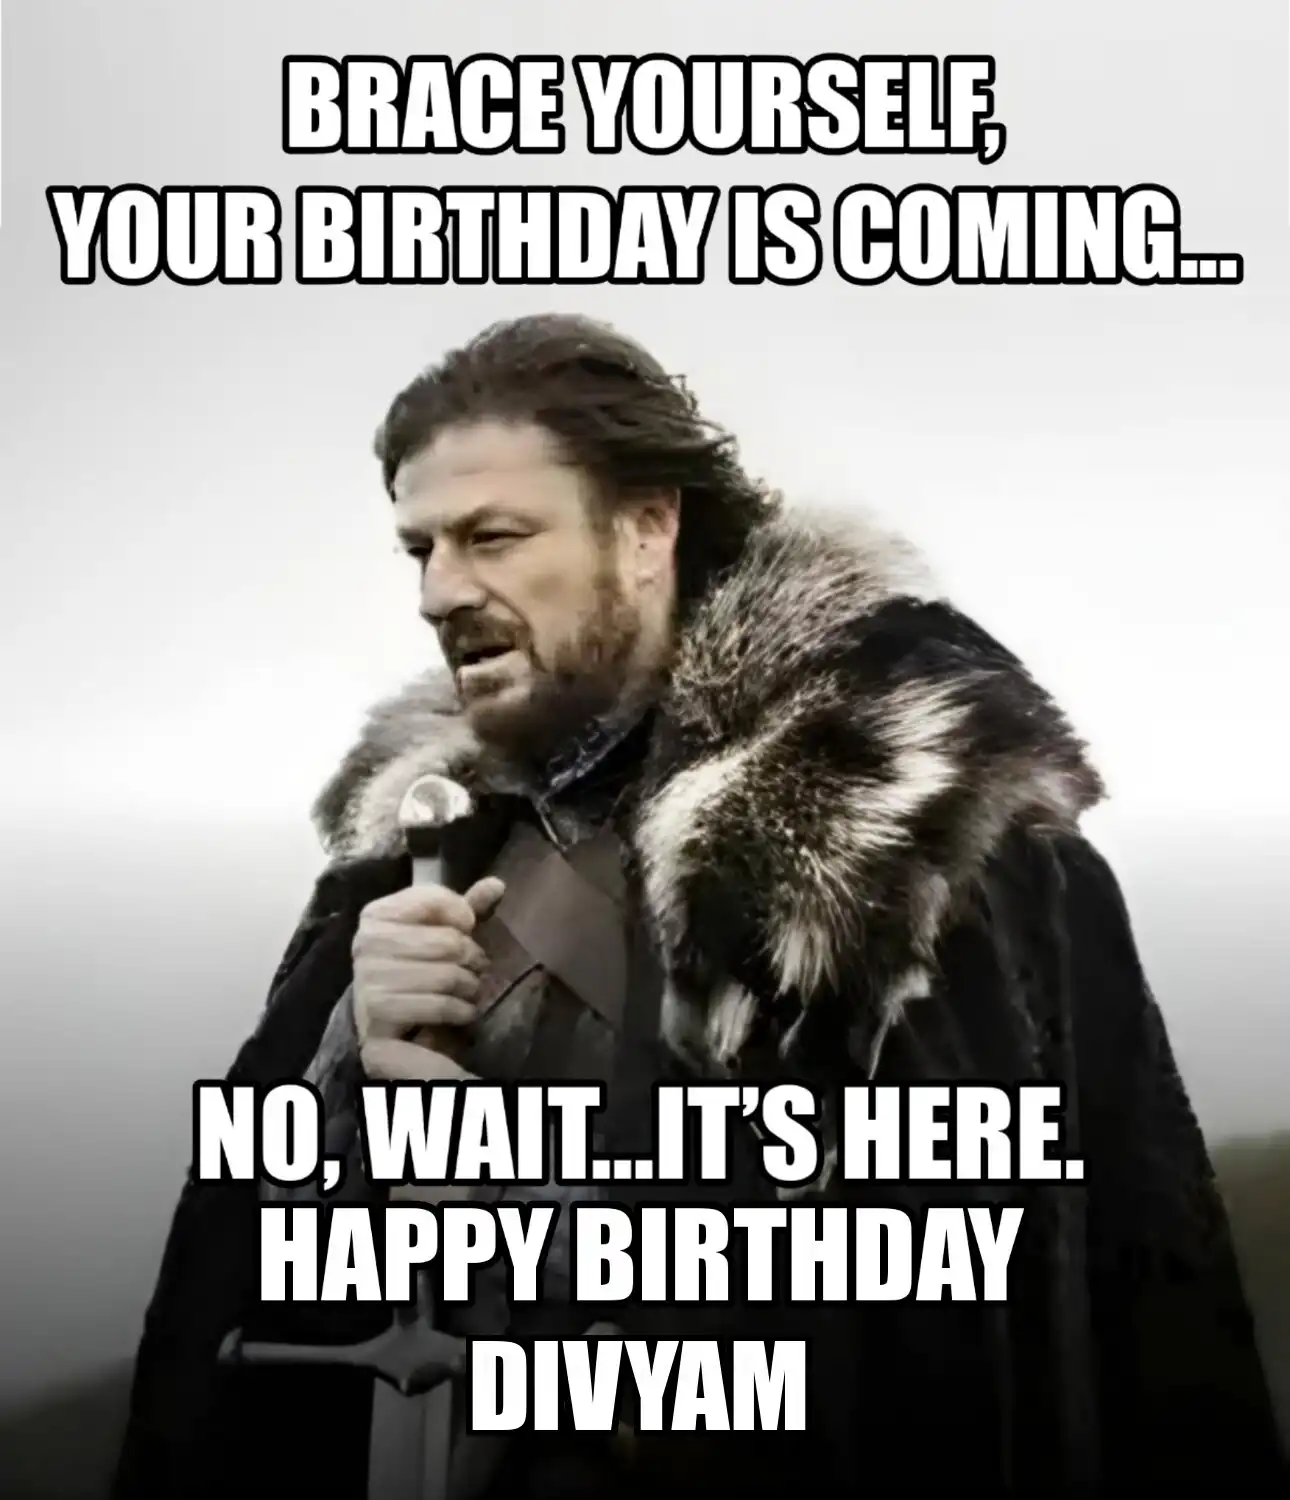 Happy Birthday Divyam Brace Yourself Your Birthday Is Coming Meme